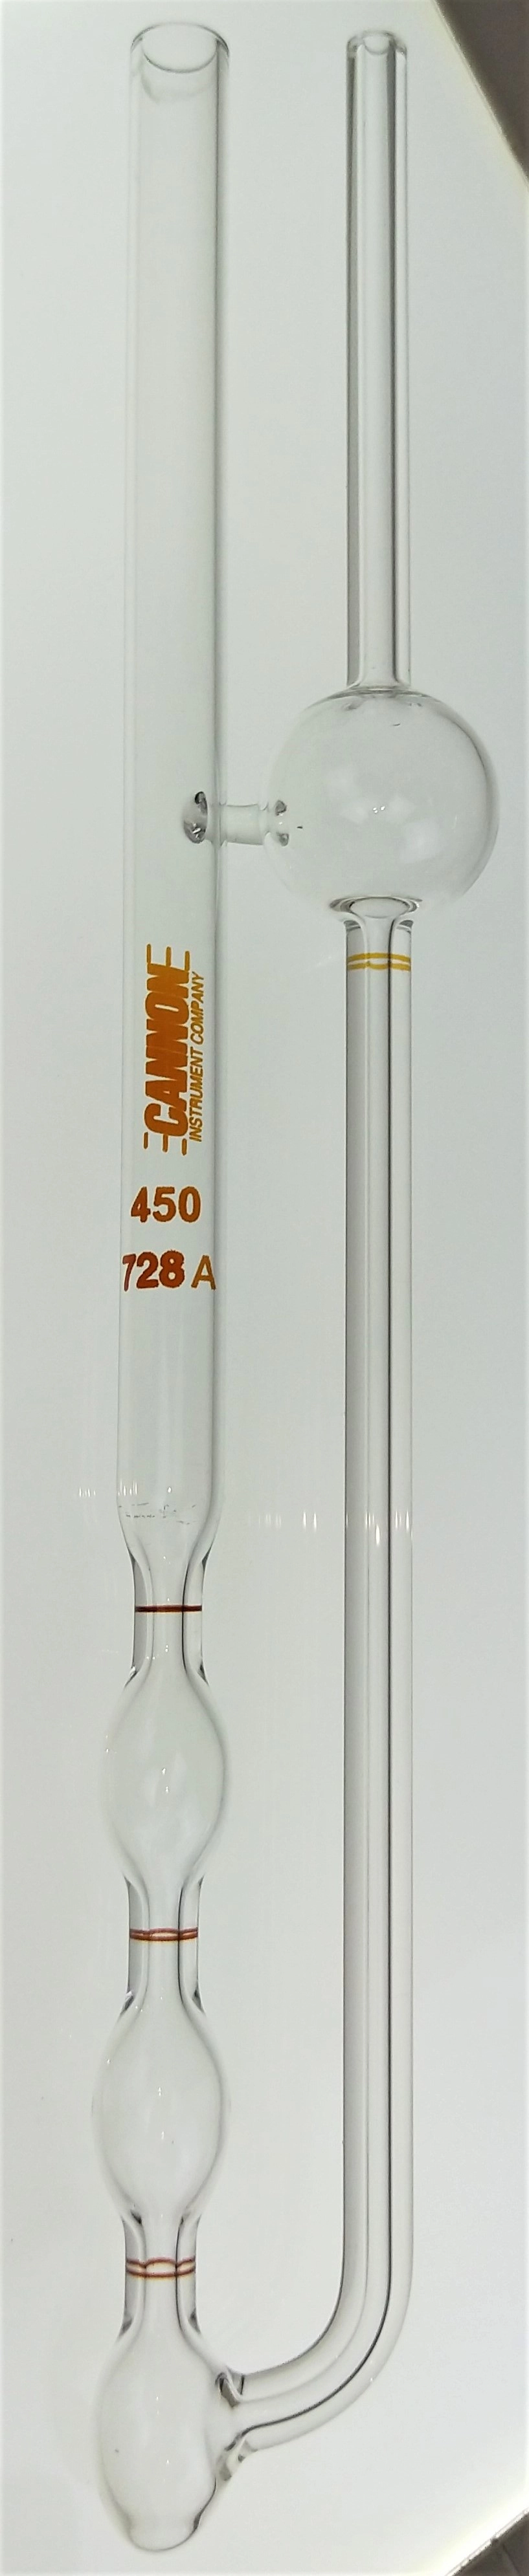 Cannon-Fenske CFOC-450 (9721-F77) Certified Opaque Viscometer Tube - Size 450